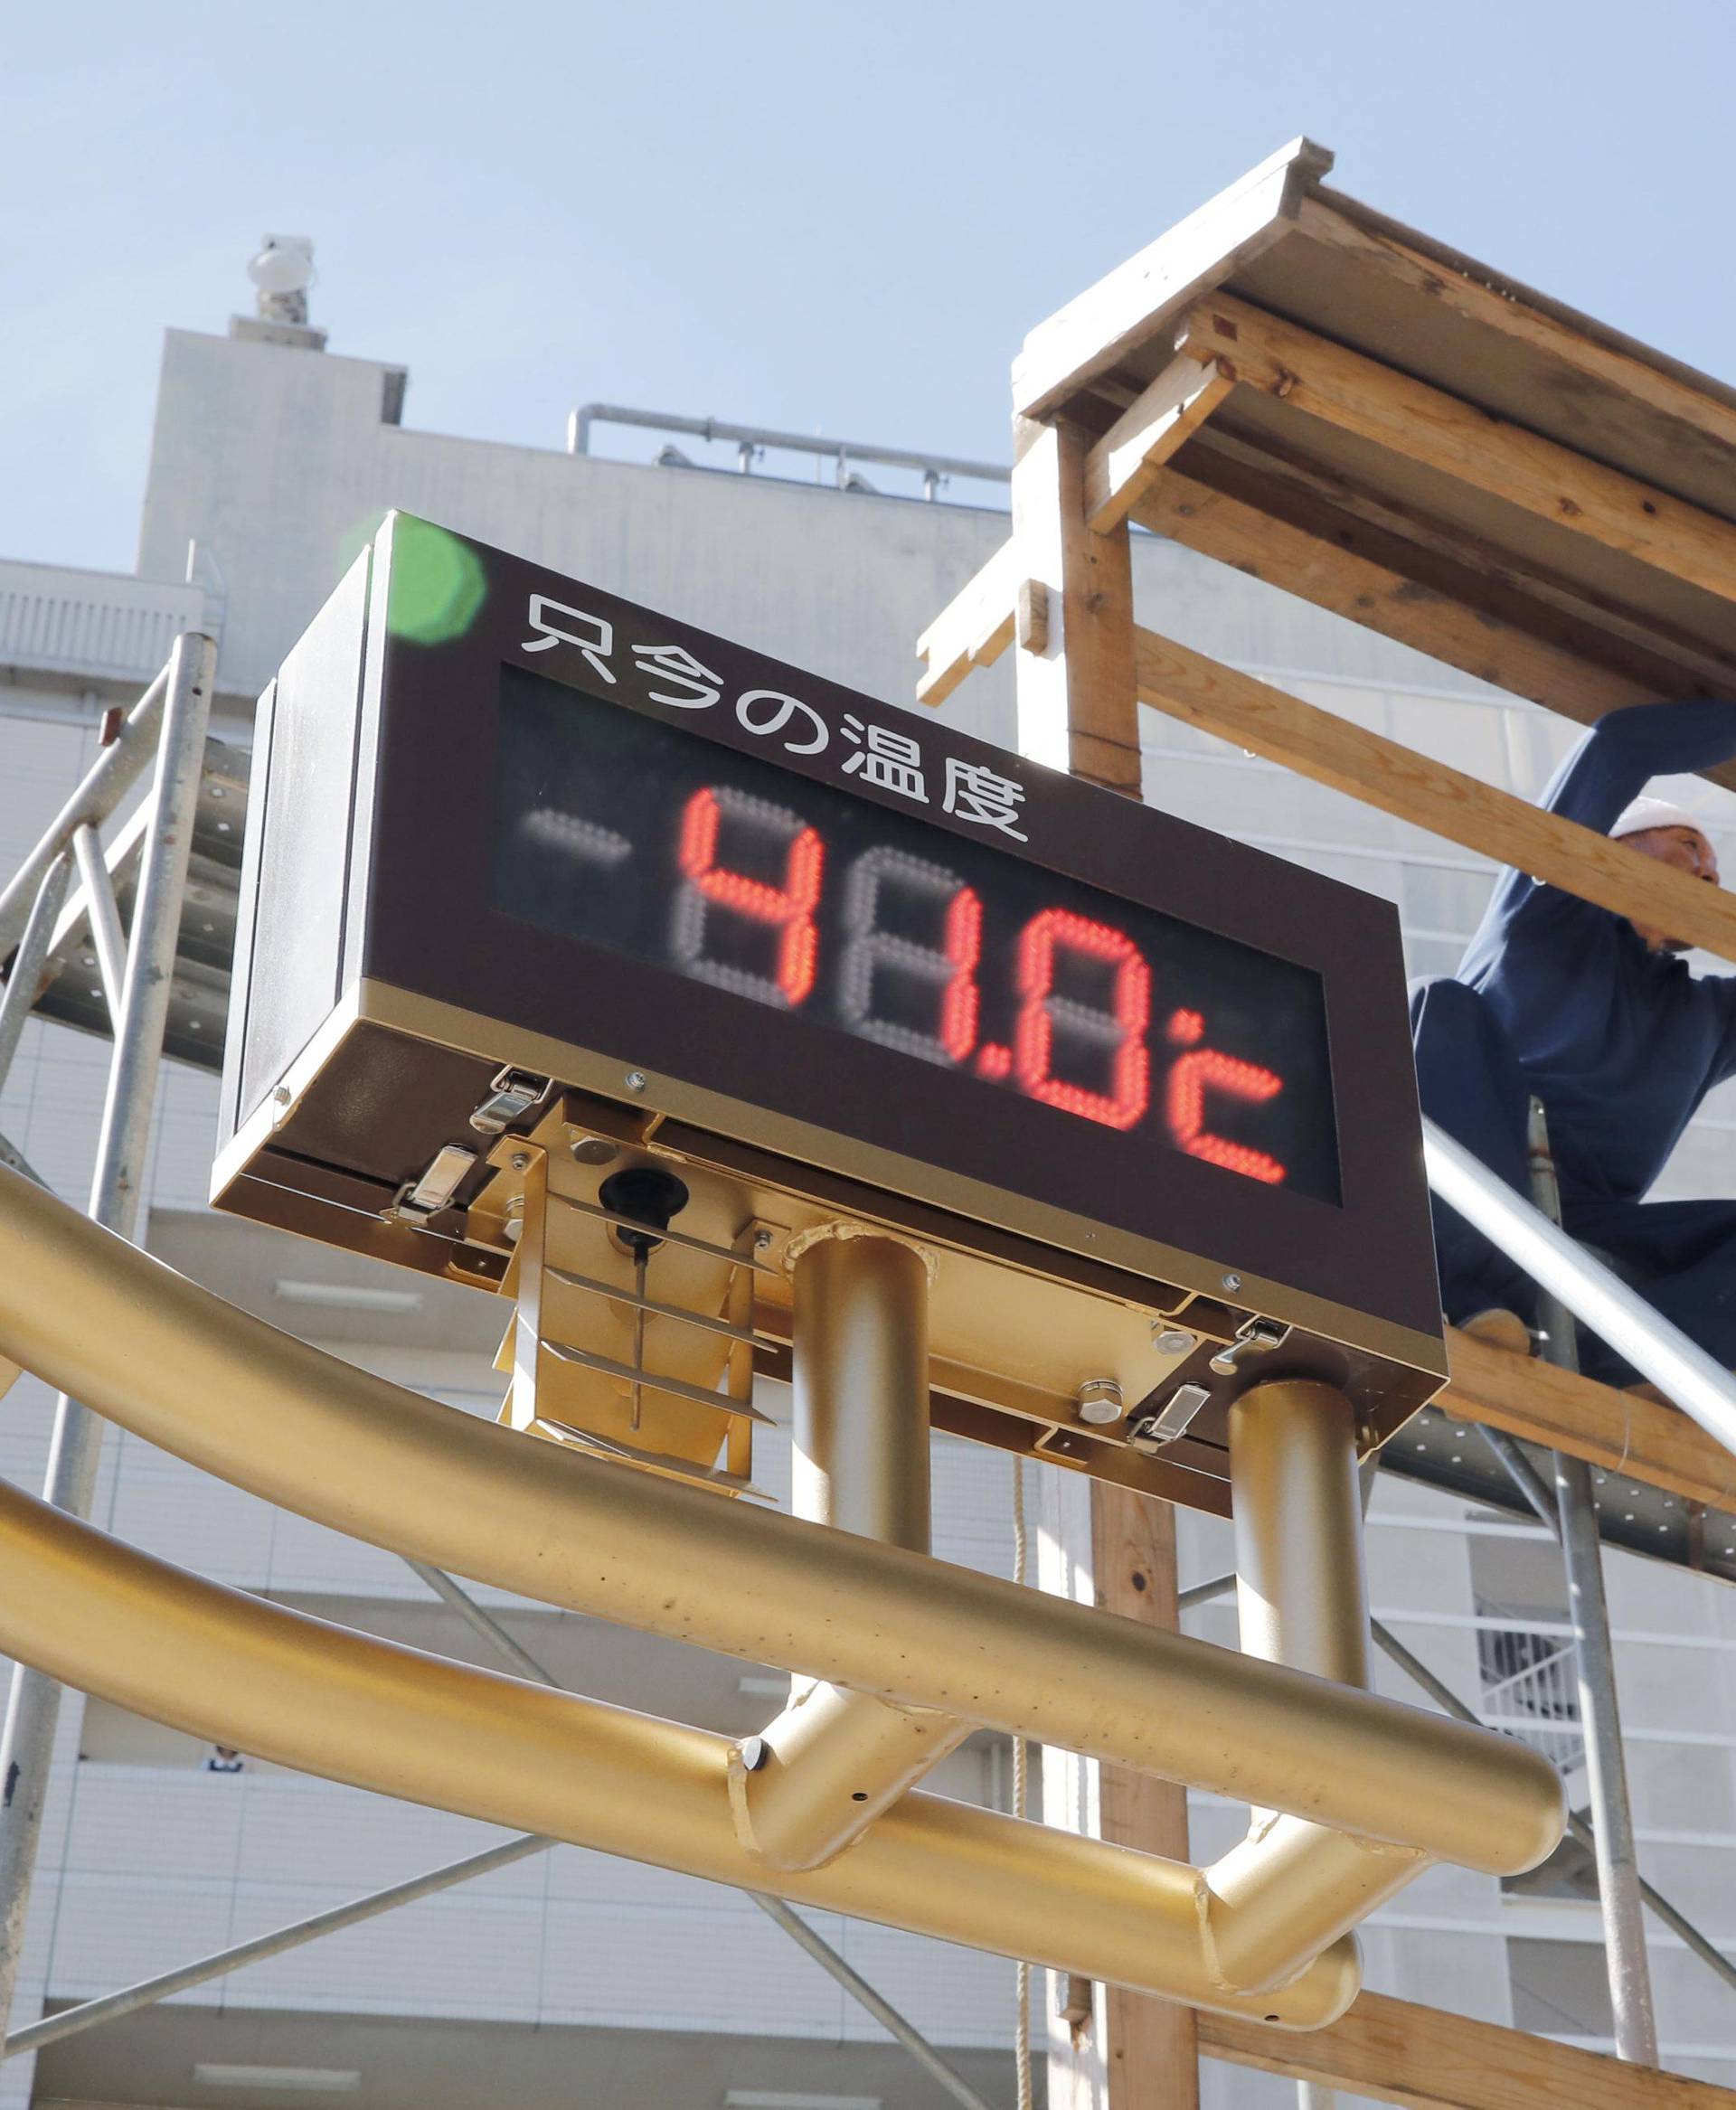 A temperature indicator measures 41.0 degrees Celsius in Kumagaya